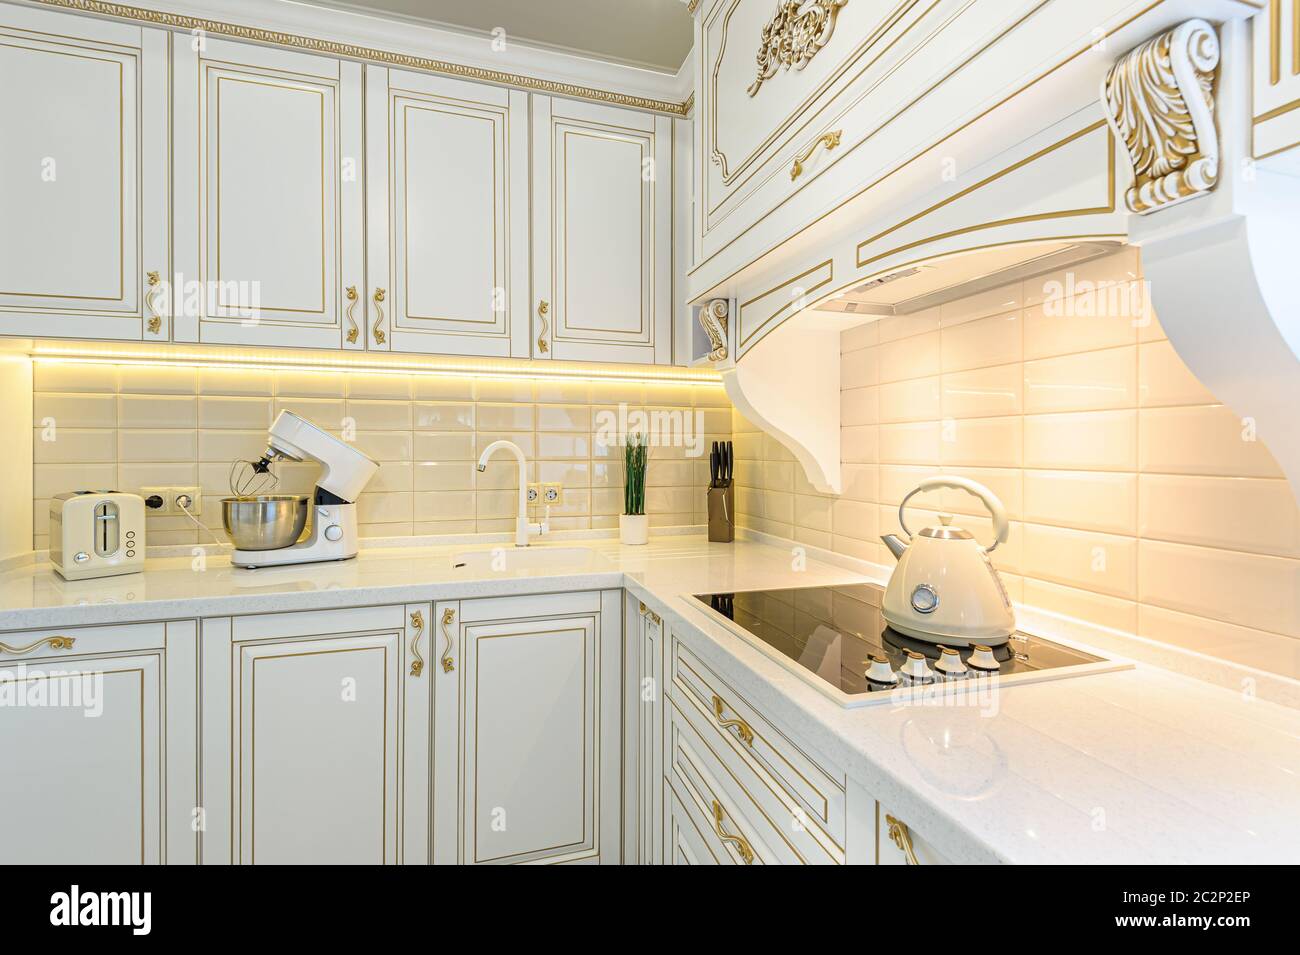 neoclassic style luxury kitchen interior Stock Photo